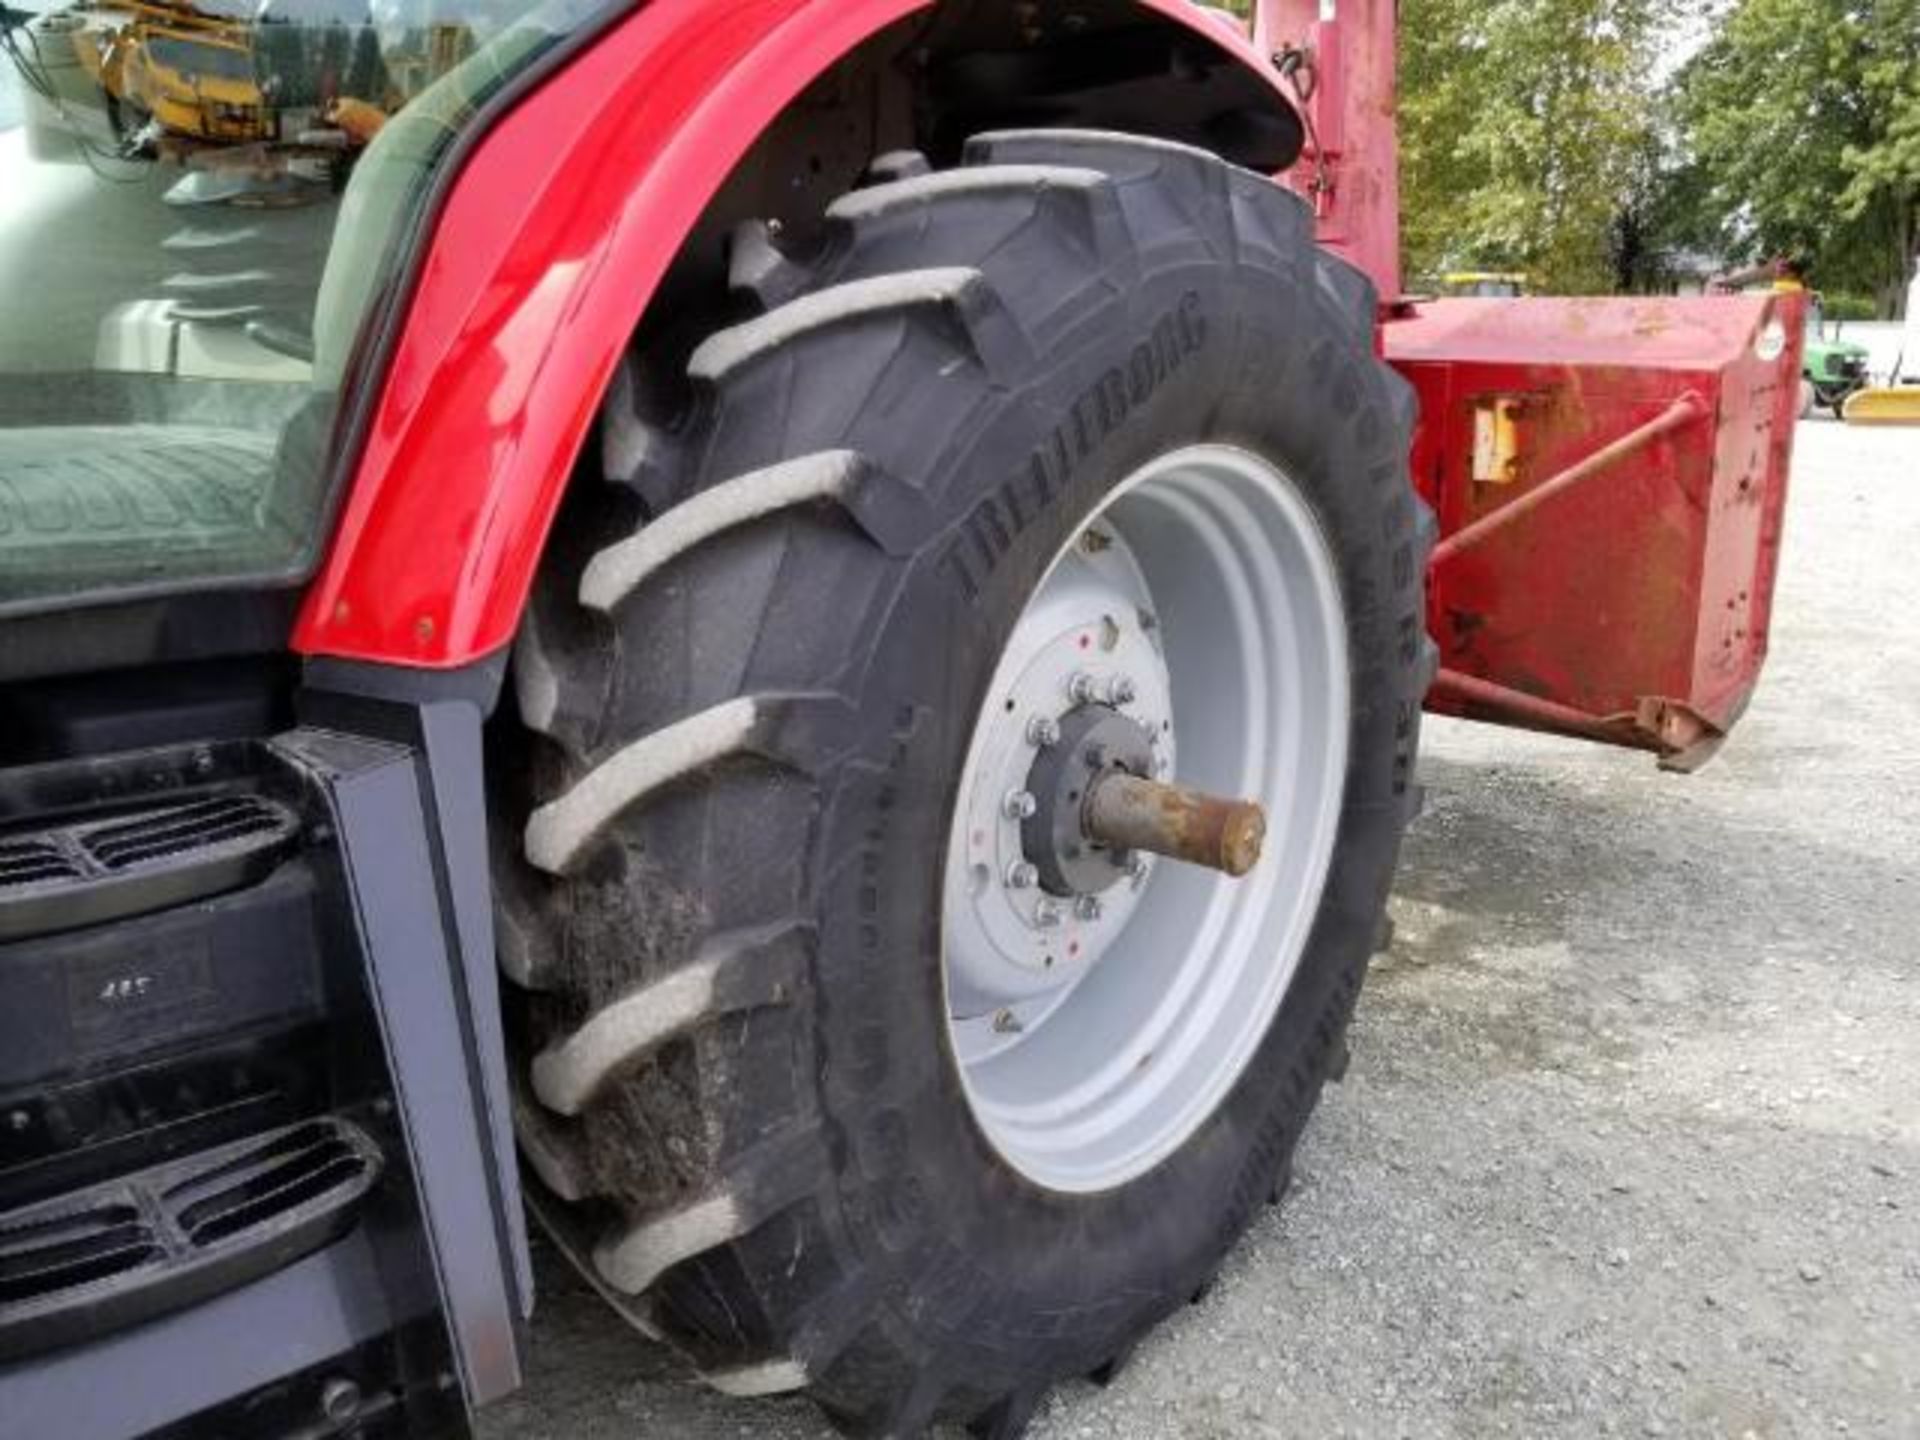 2014 Tracteur Massey Fugerson MF661, 1214 hres, 150 HP, 4 cyl., diesel, pneus av. 380/85R28 arr. - Image 18 of 19